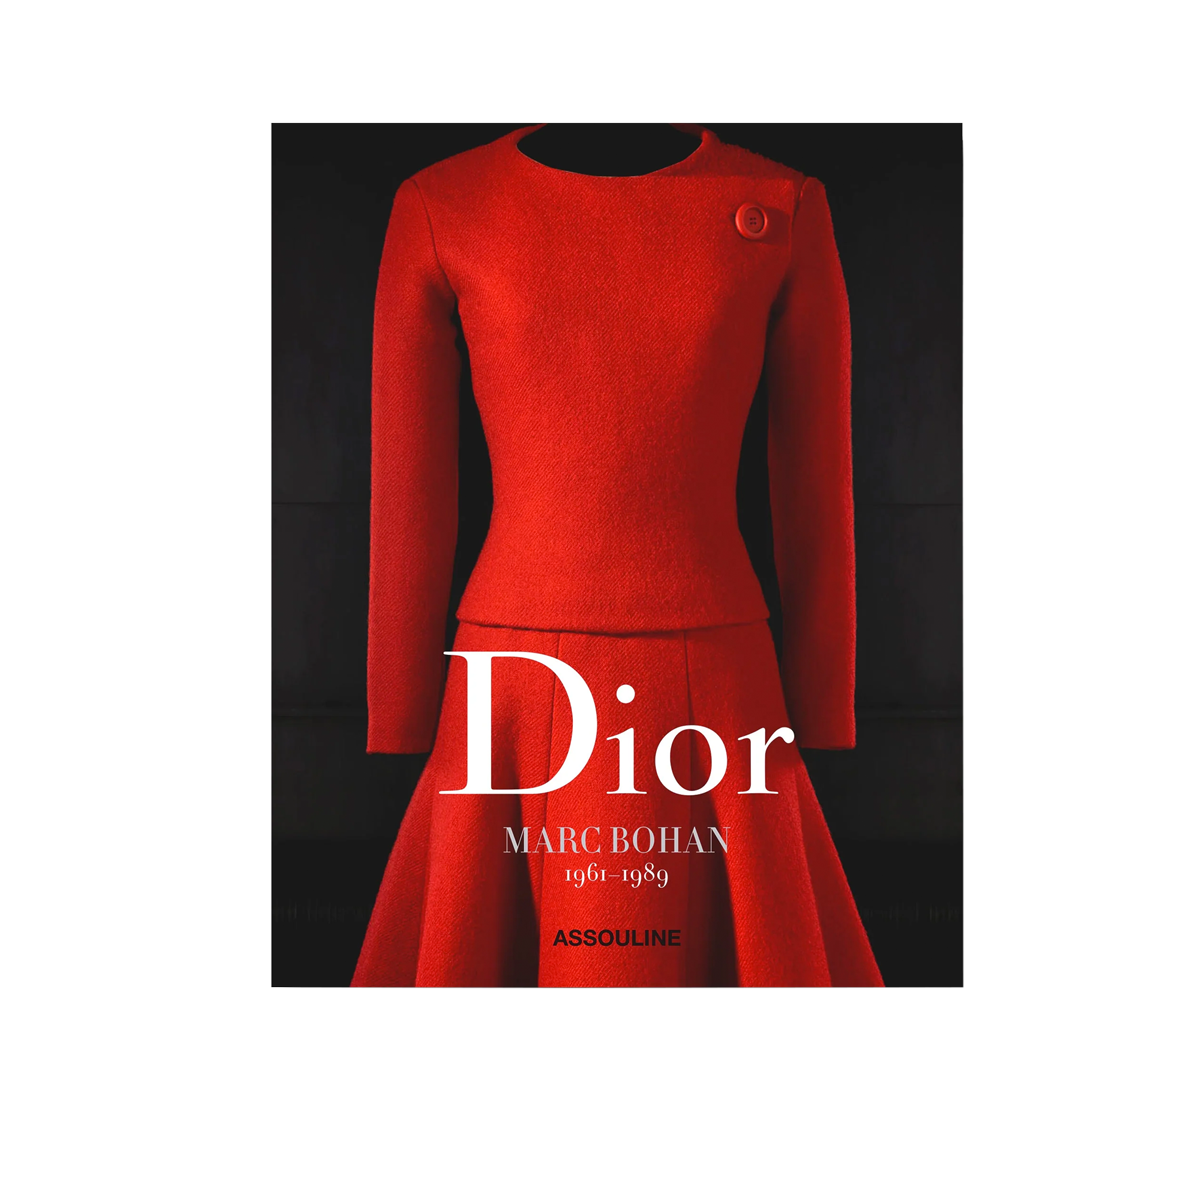 Dior Coffee Table Book